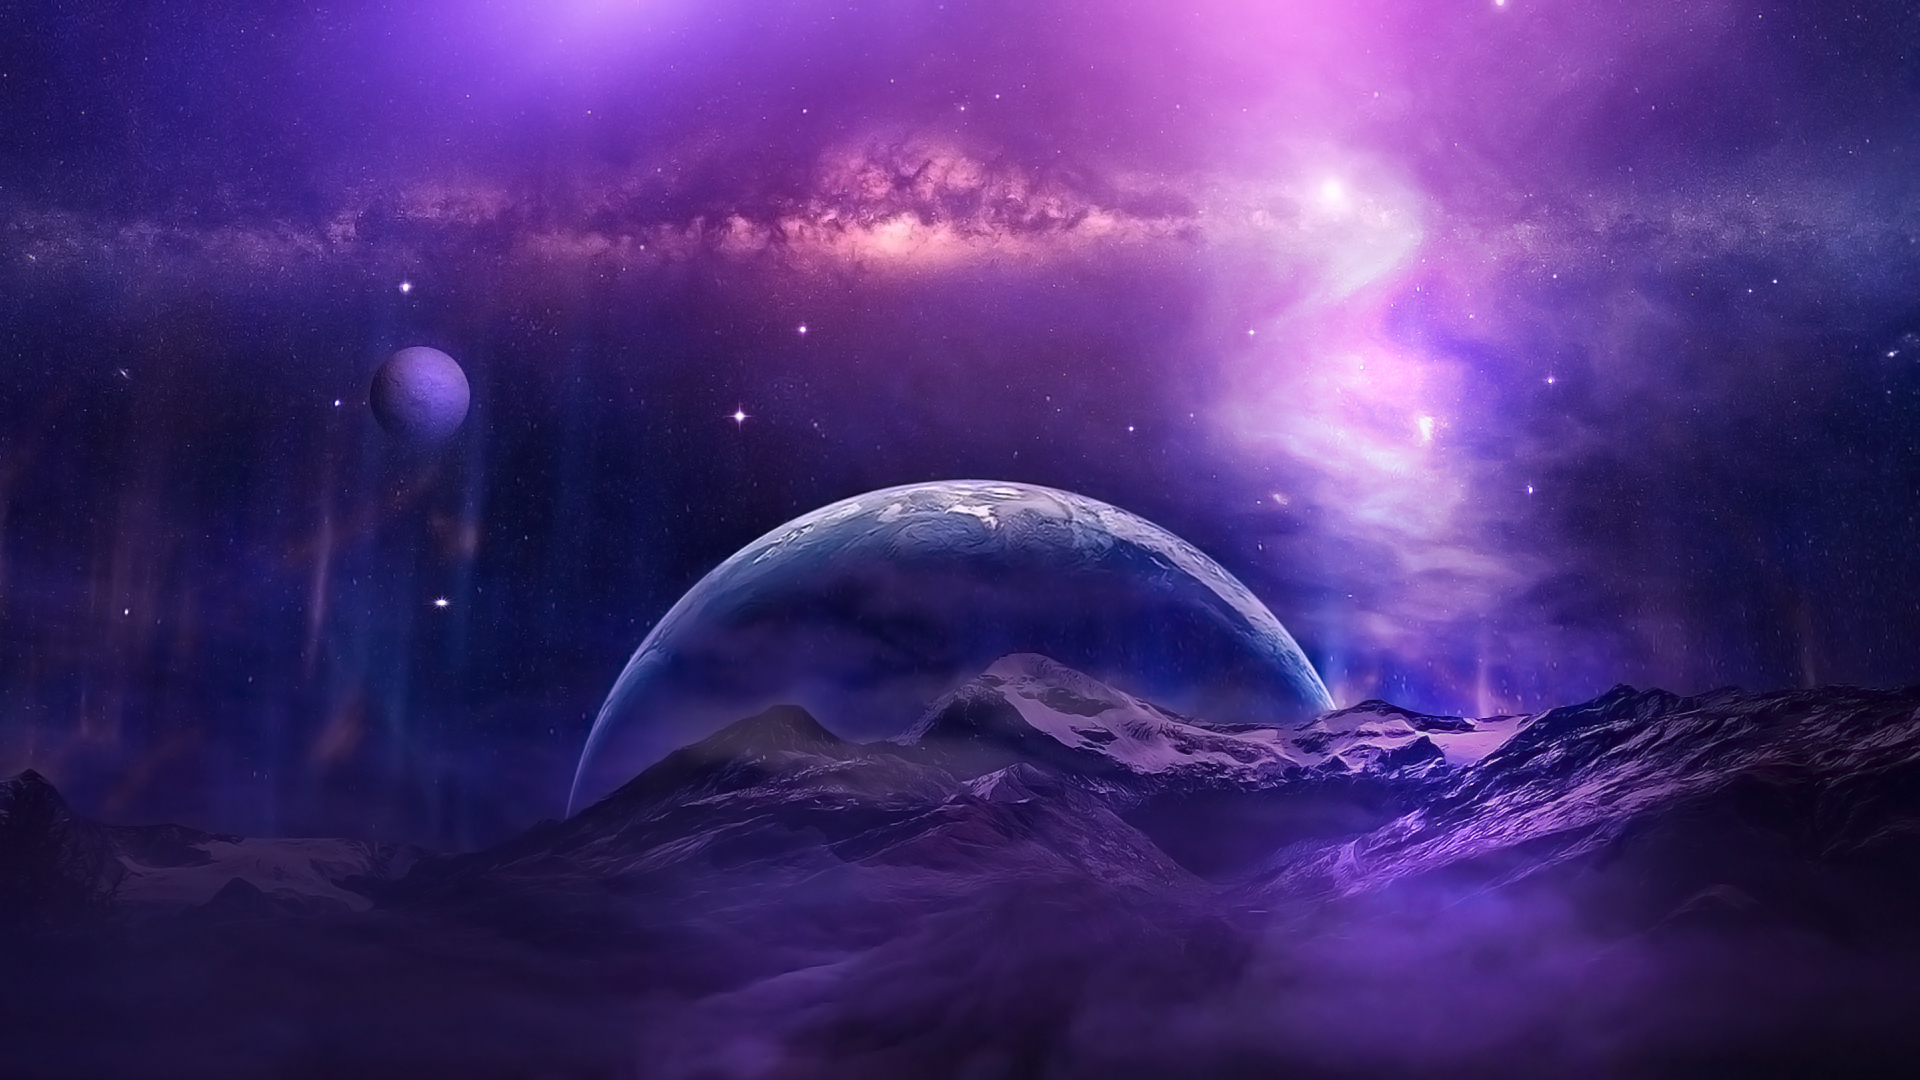 Purple Planet Images  Free Download on Freepik